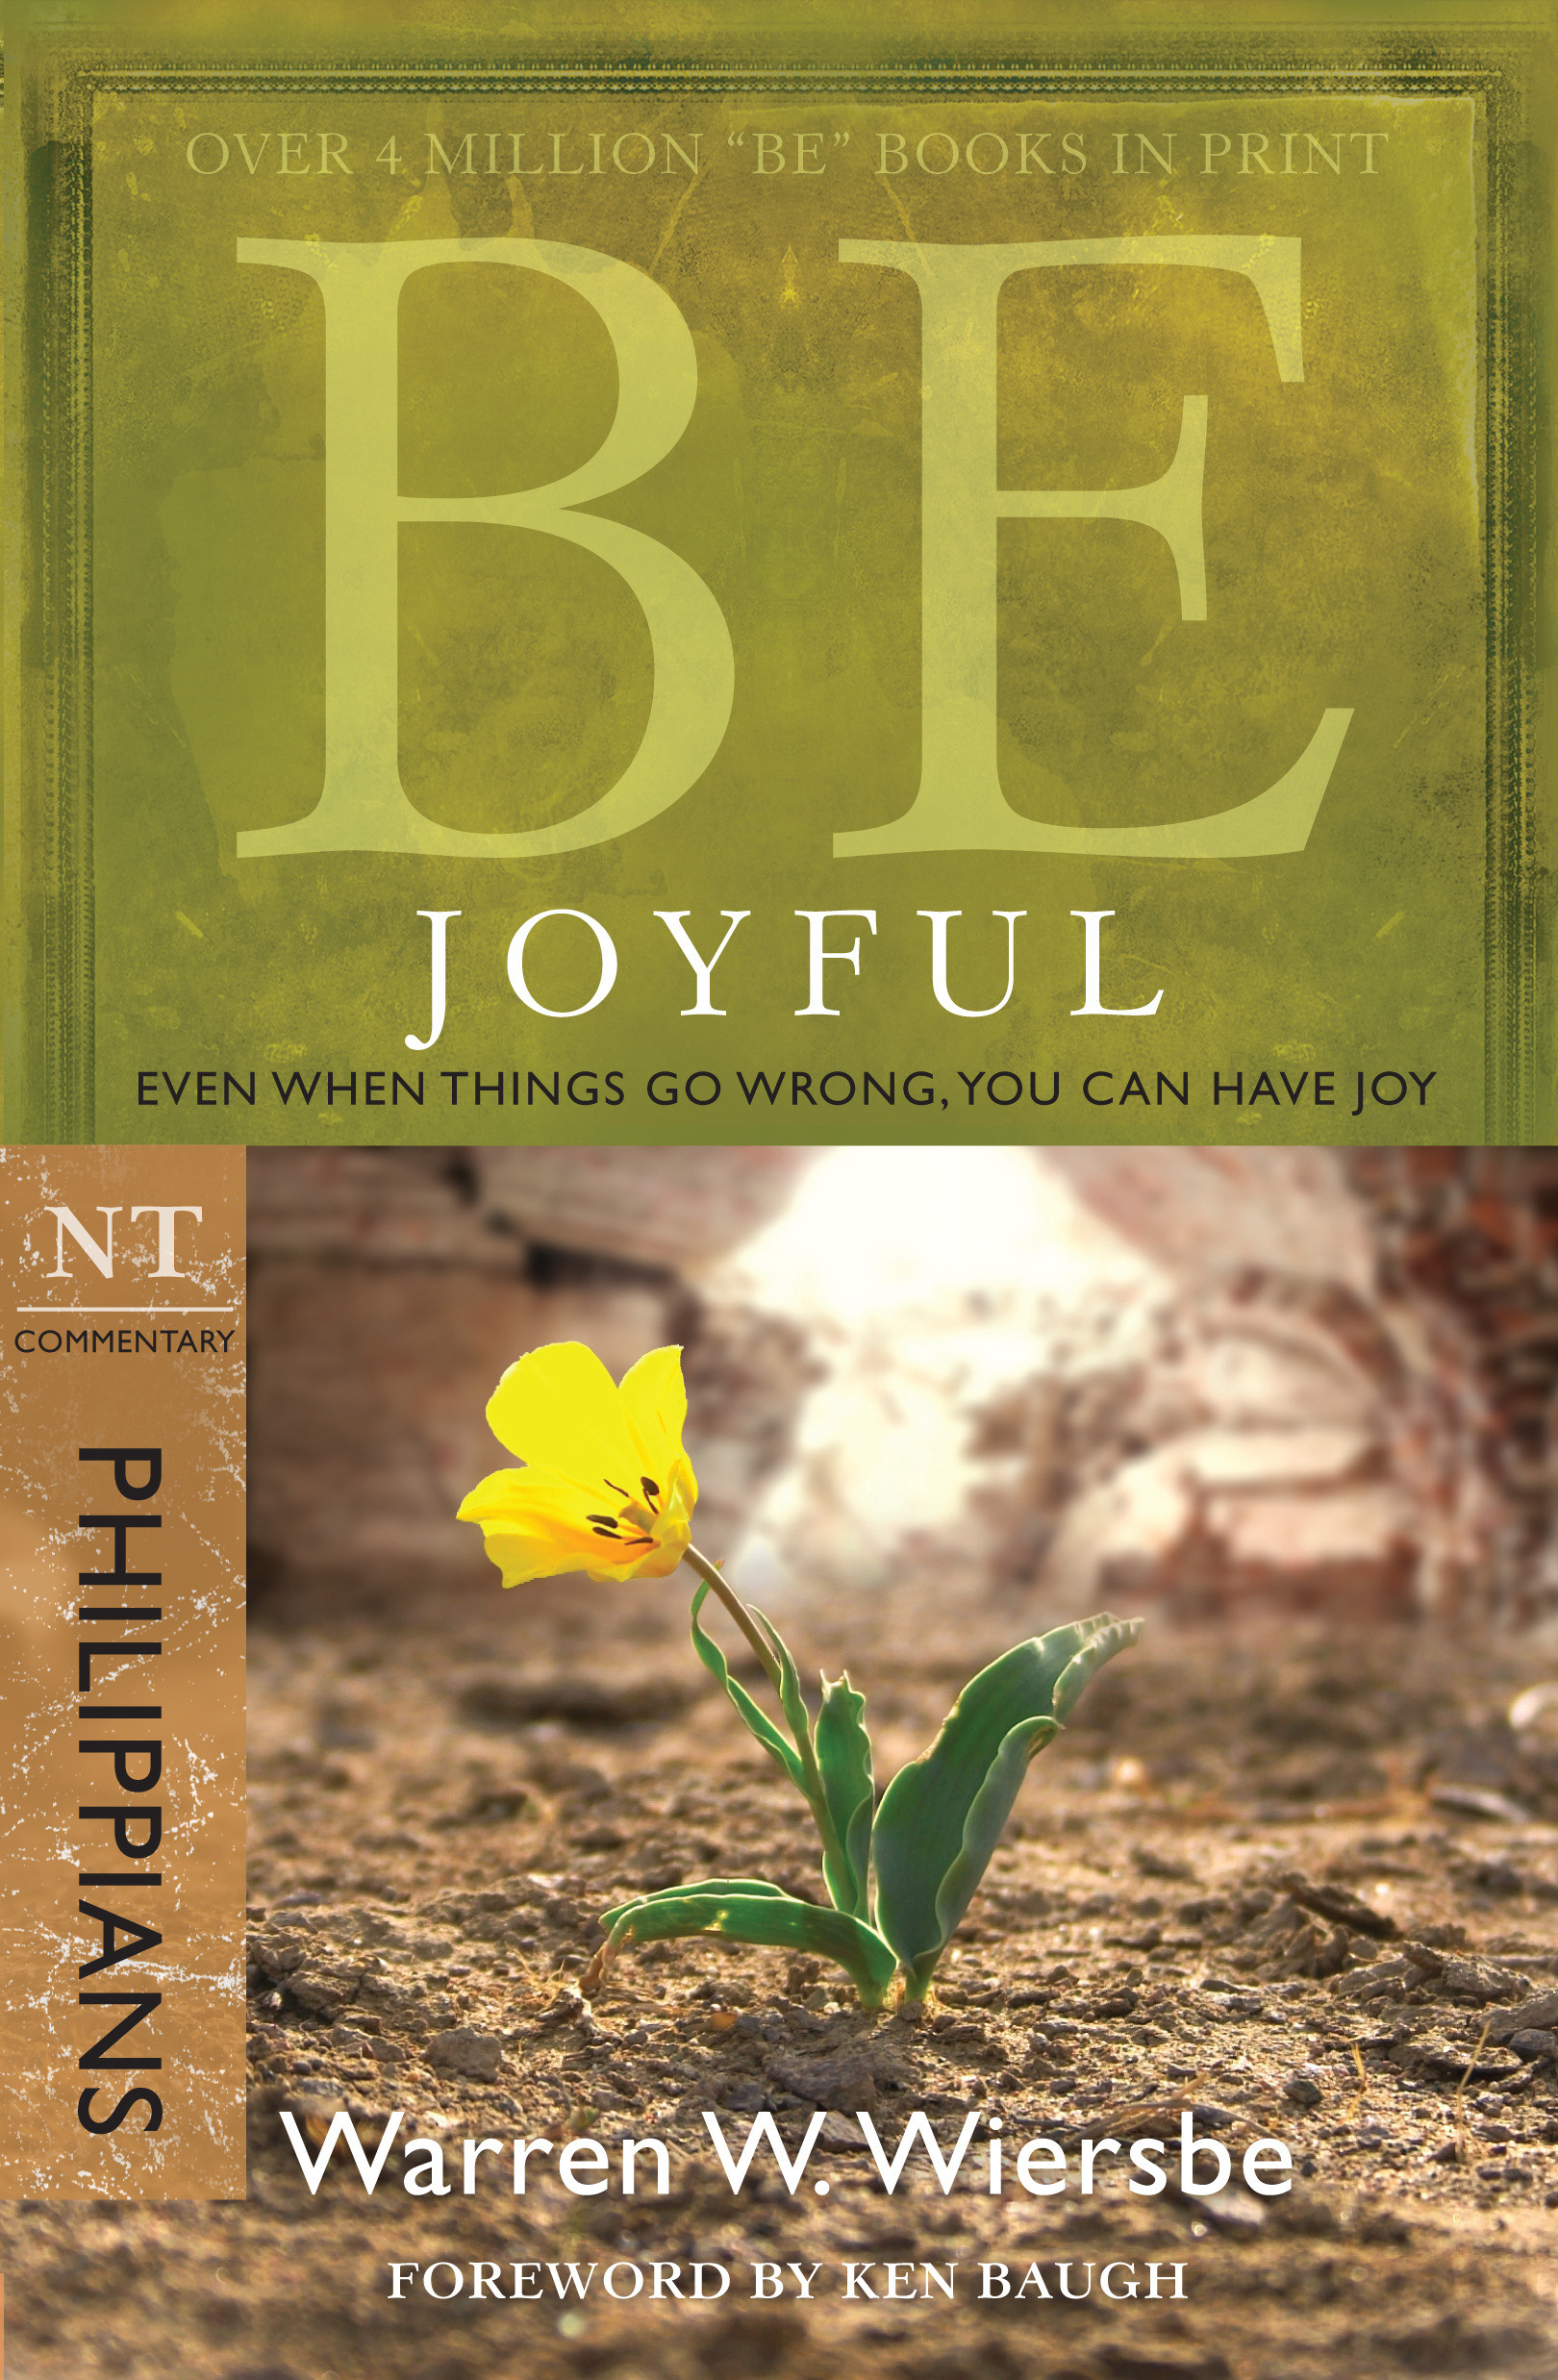 Be Joyful (Philippians)